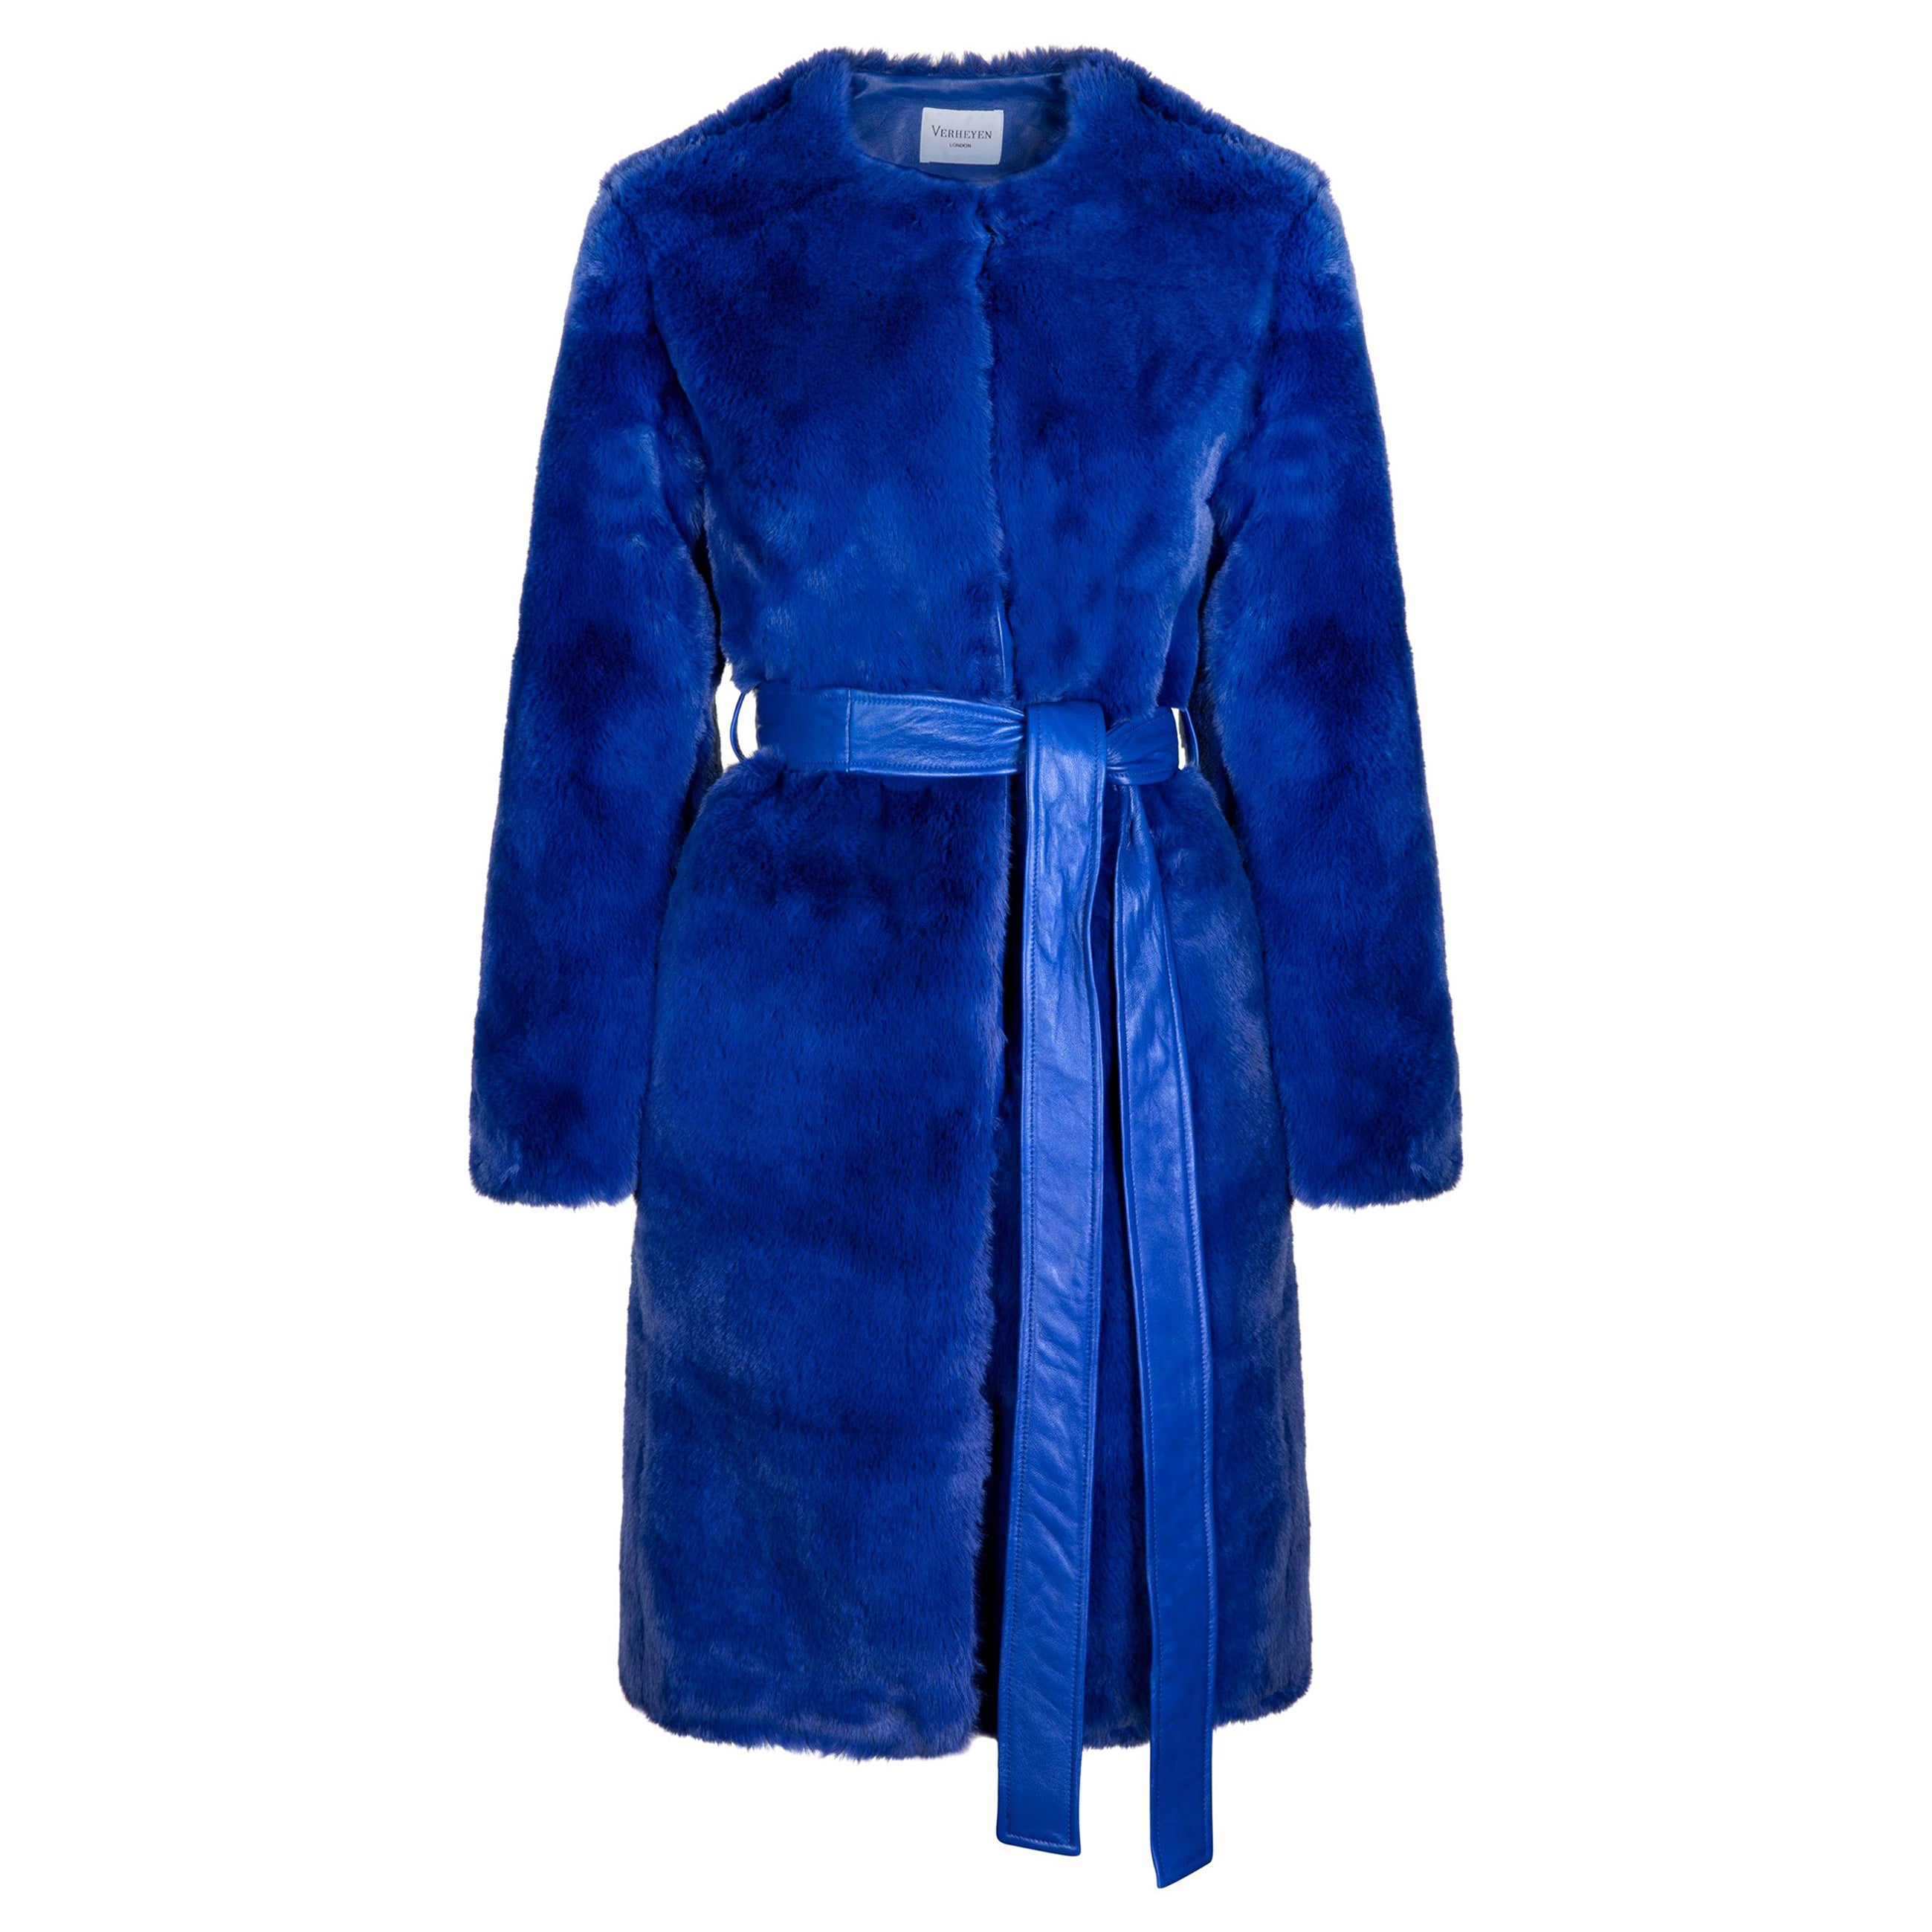 Verheyen London Serena  Collarless Faux Fur Coat in Blue - Size uk 10 For Sale